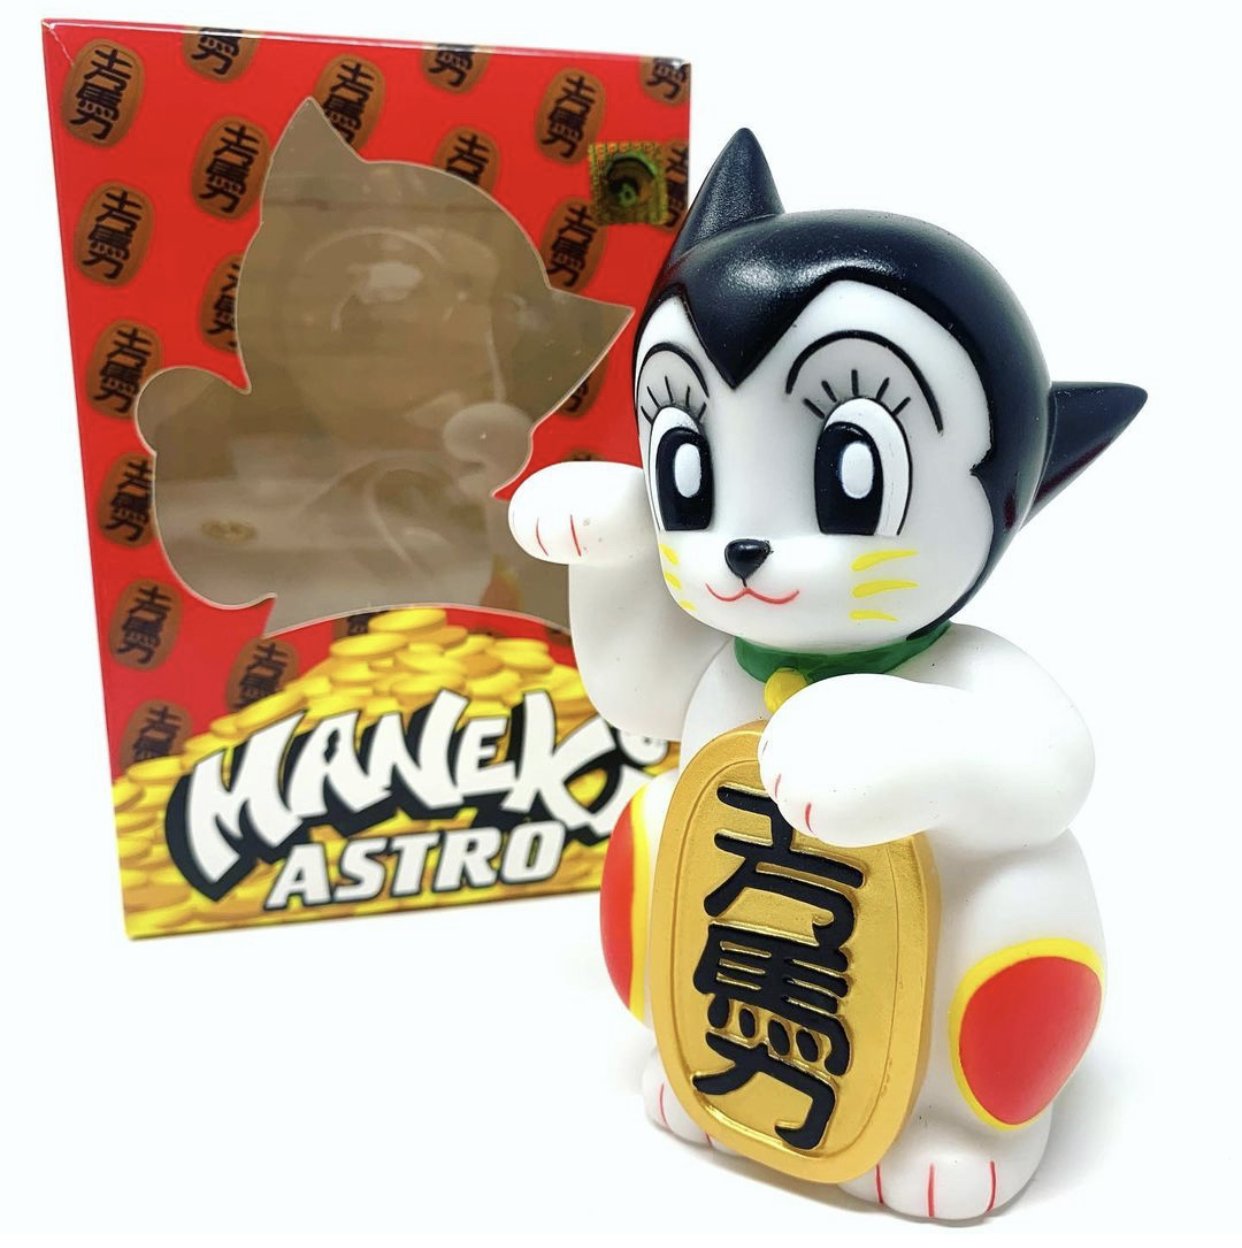 Maneki-Astro 5.5 inch vinyl figure by DoomCoDesigns Available Now